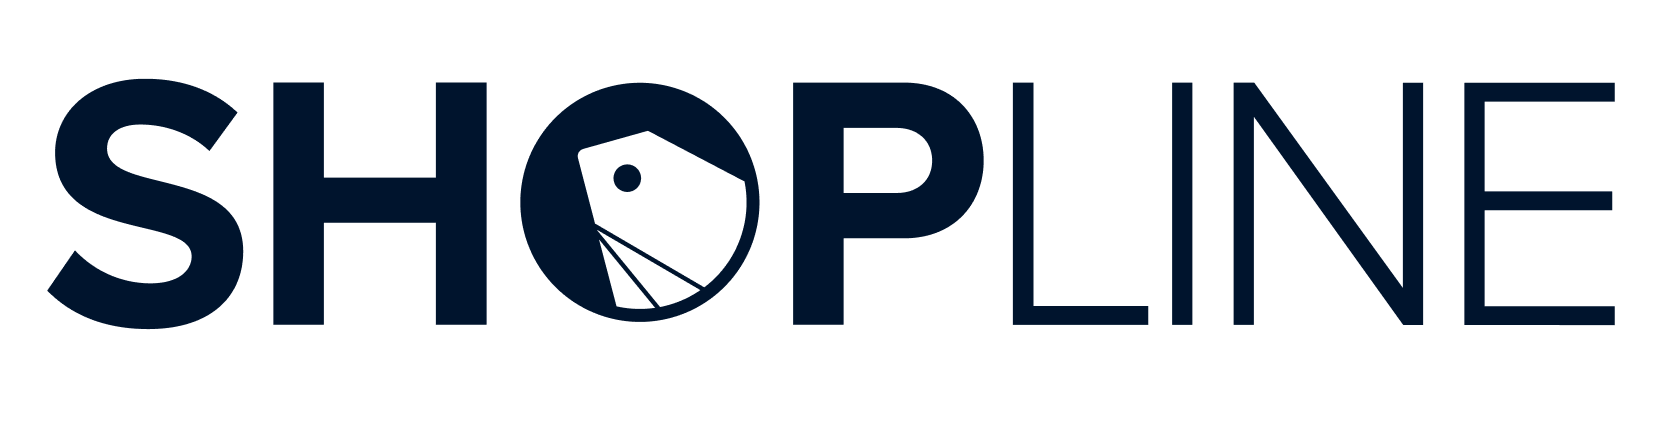 SHOPLINE logo